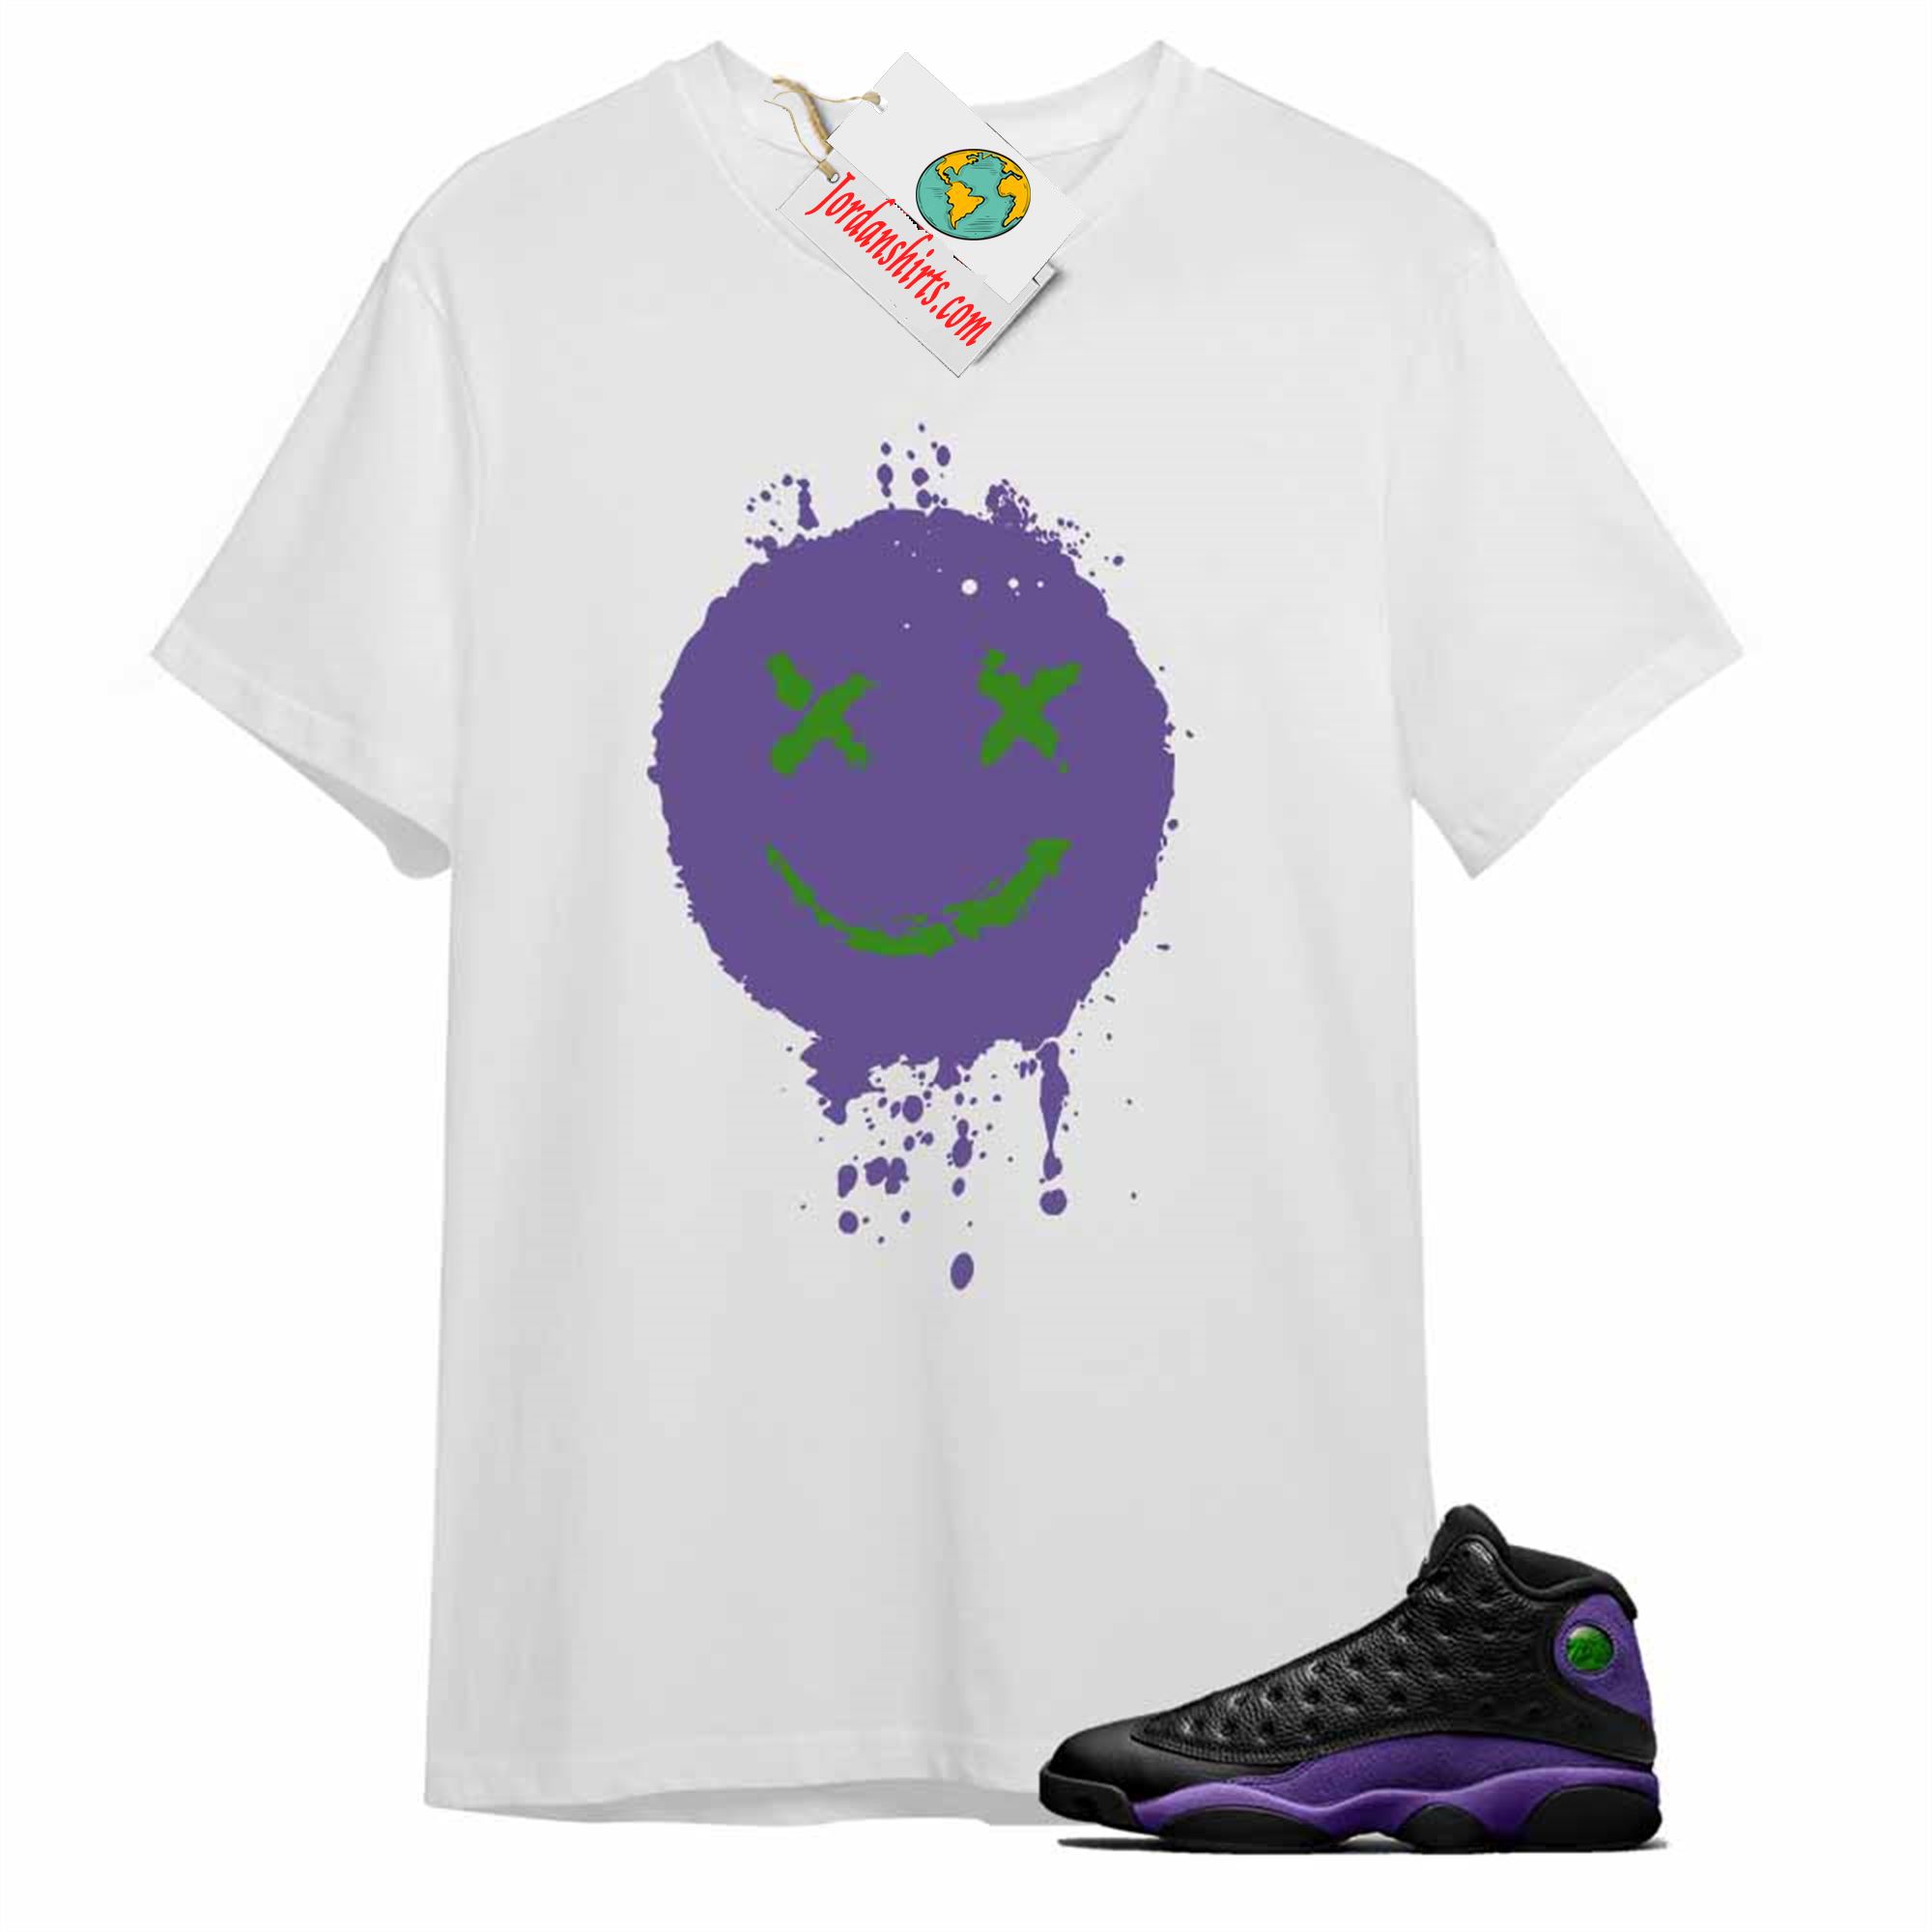 Jordan 13 Shirt, Smile Happy Face White T-shirt Air Jordan 13 Court Purple 13s Full Size Up To 5xl